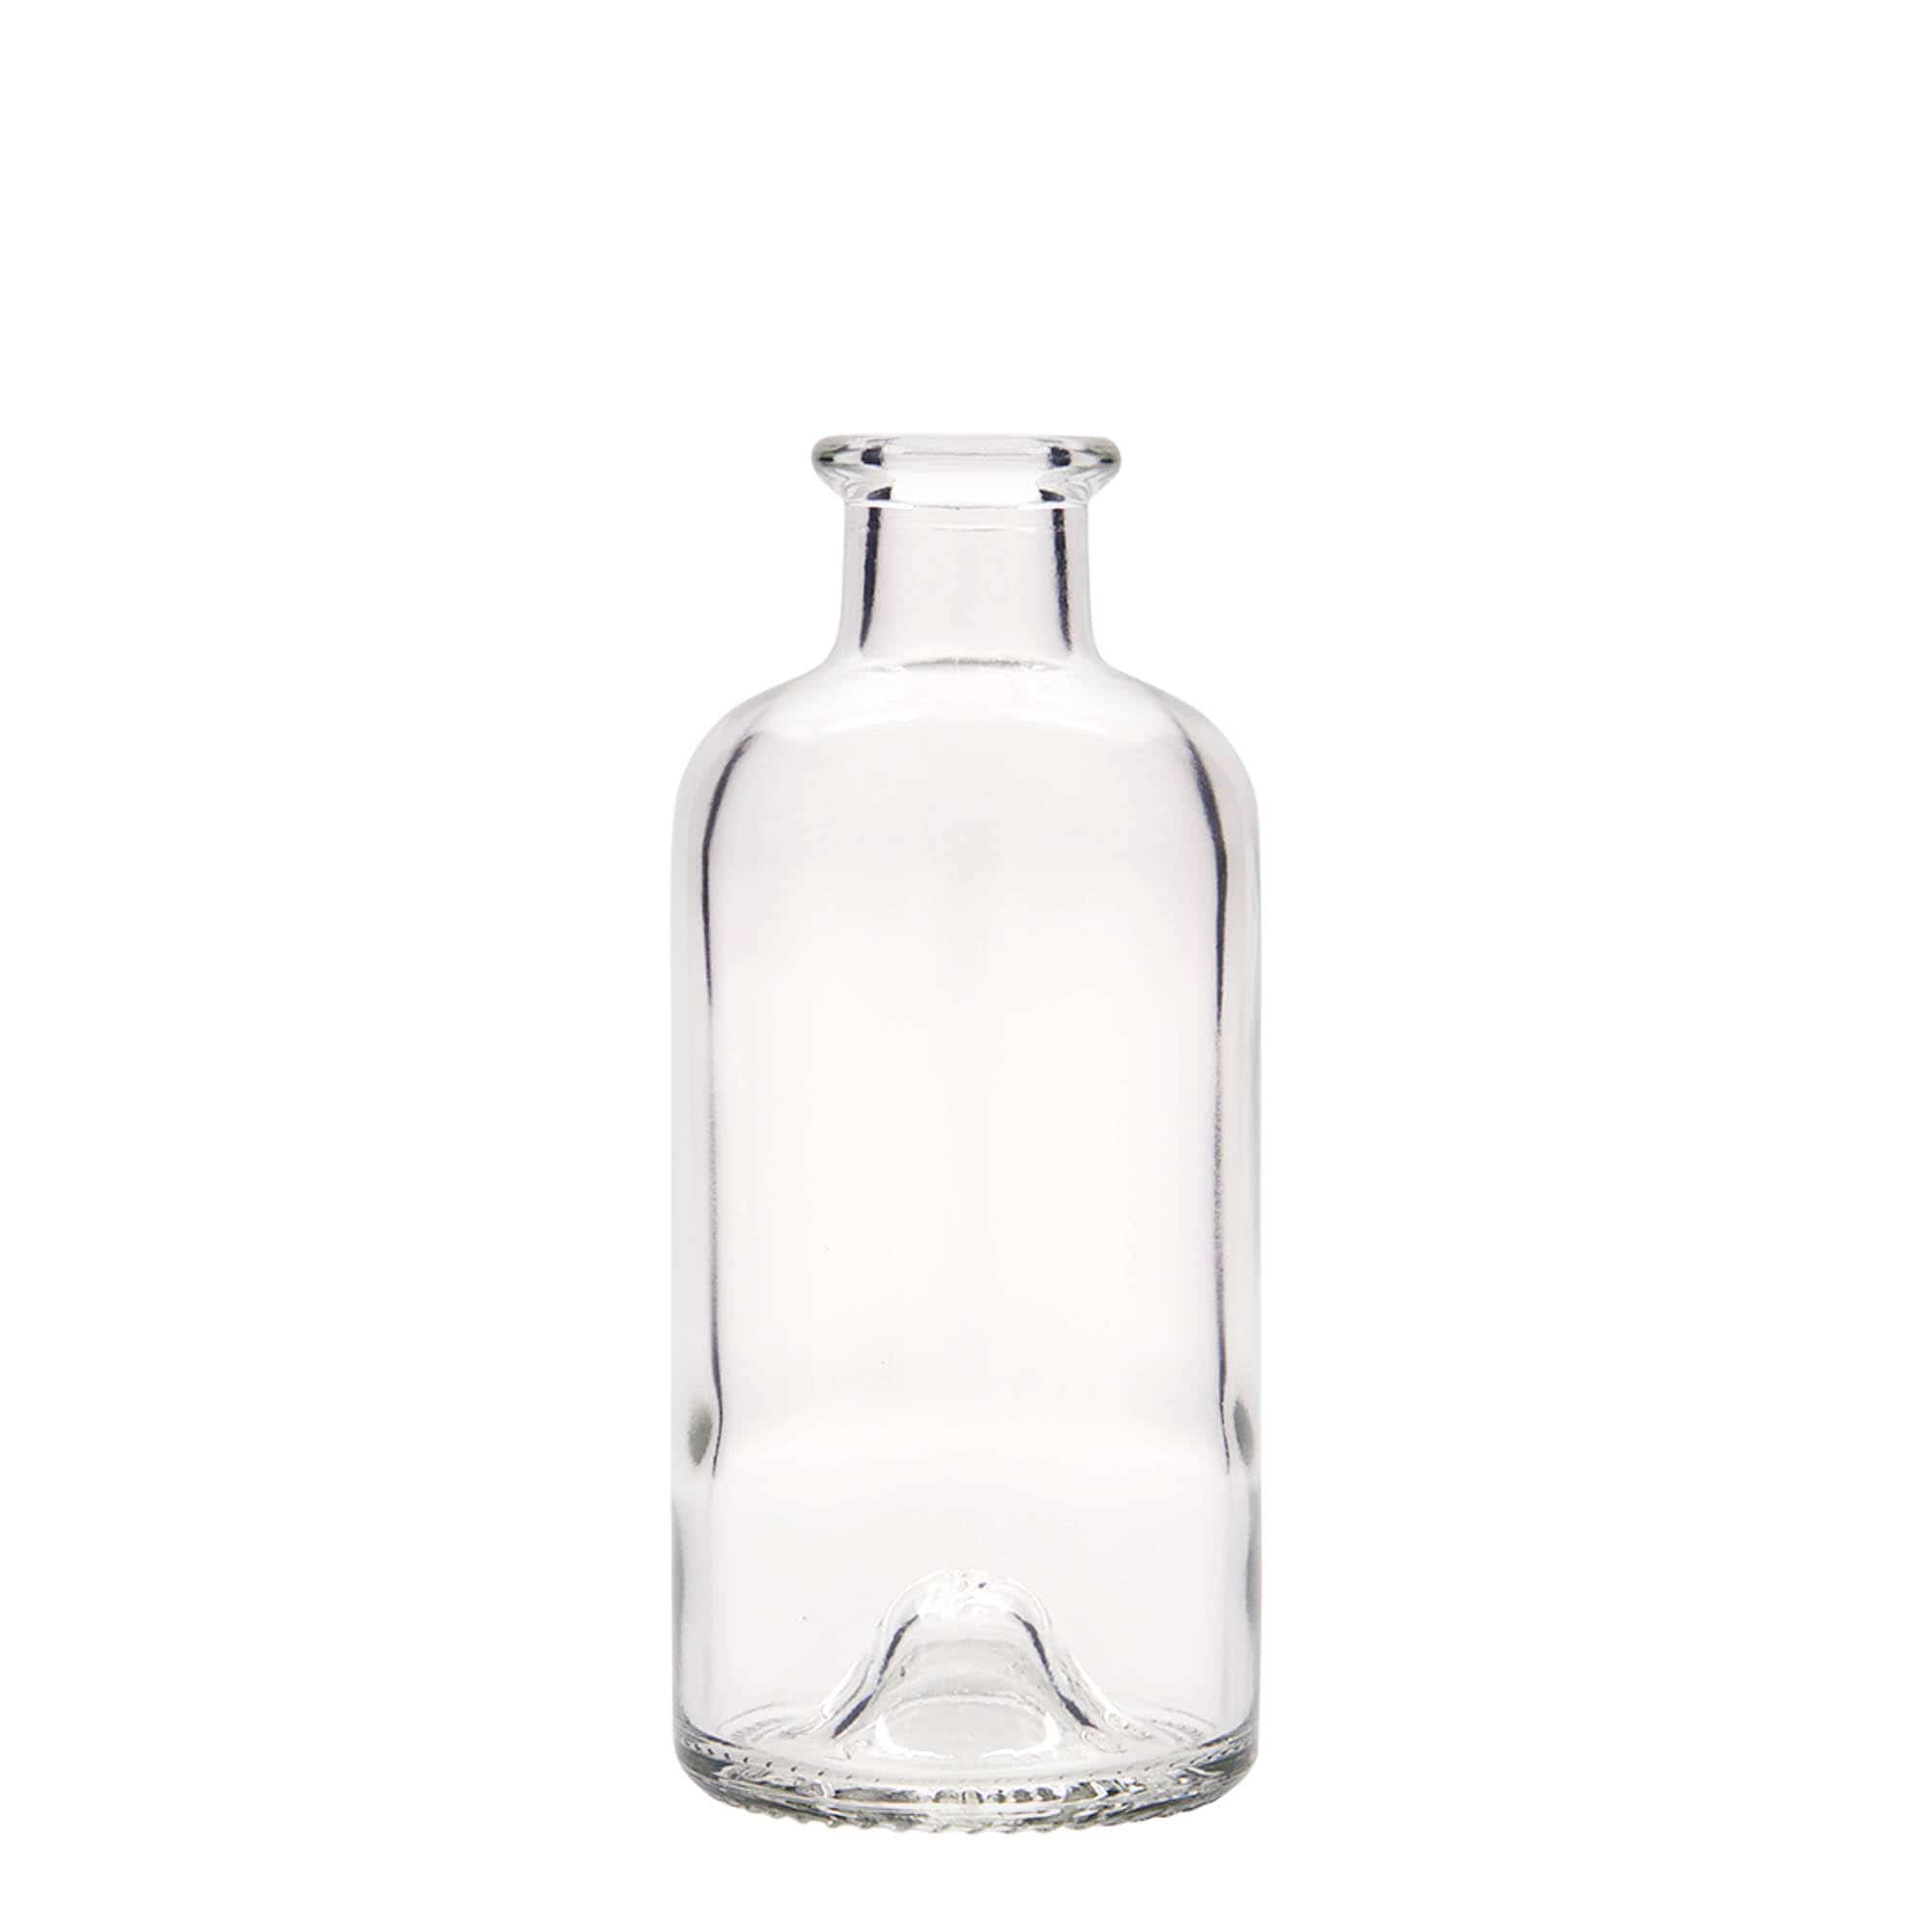 200 ml glass apothecary bottle, closure: cork